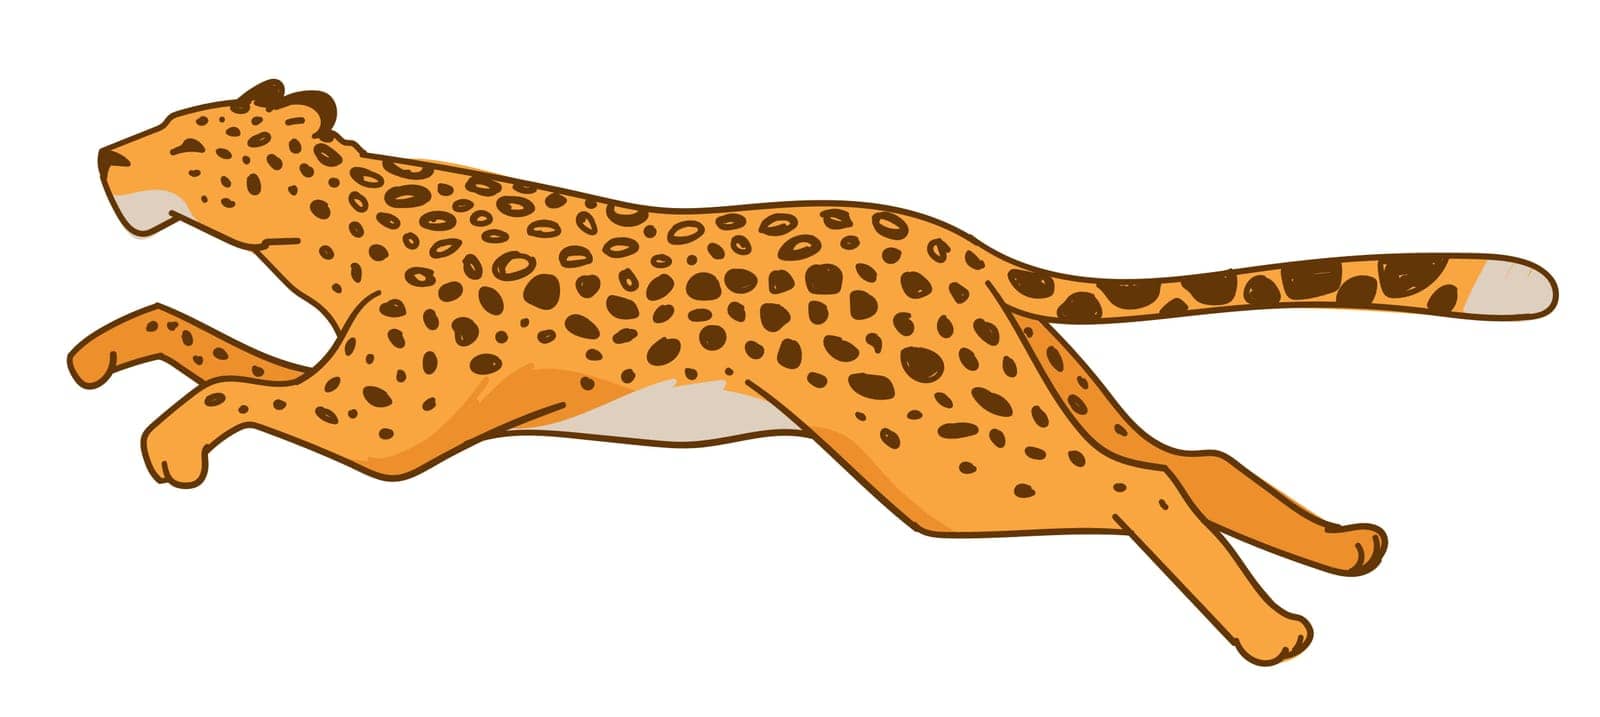 Running leopard or speedy cheetah predator animal by Sonulkaster